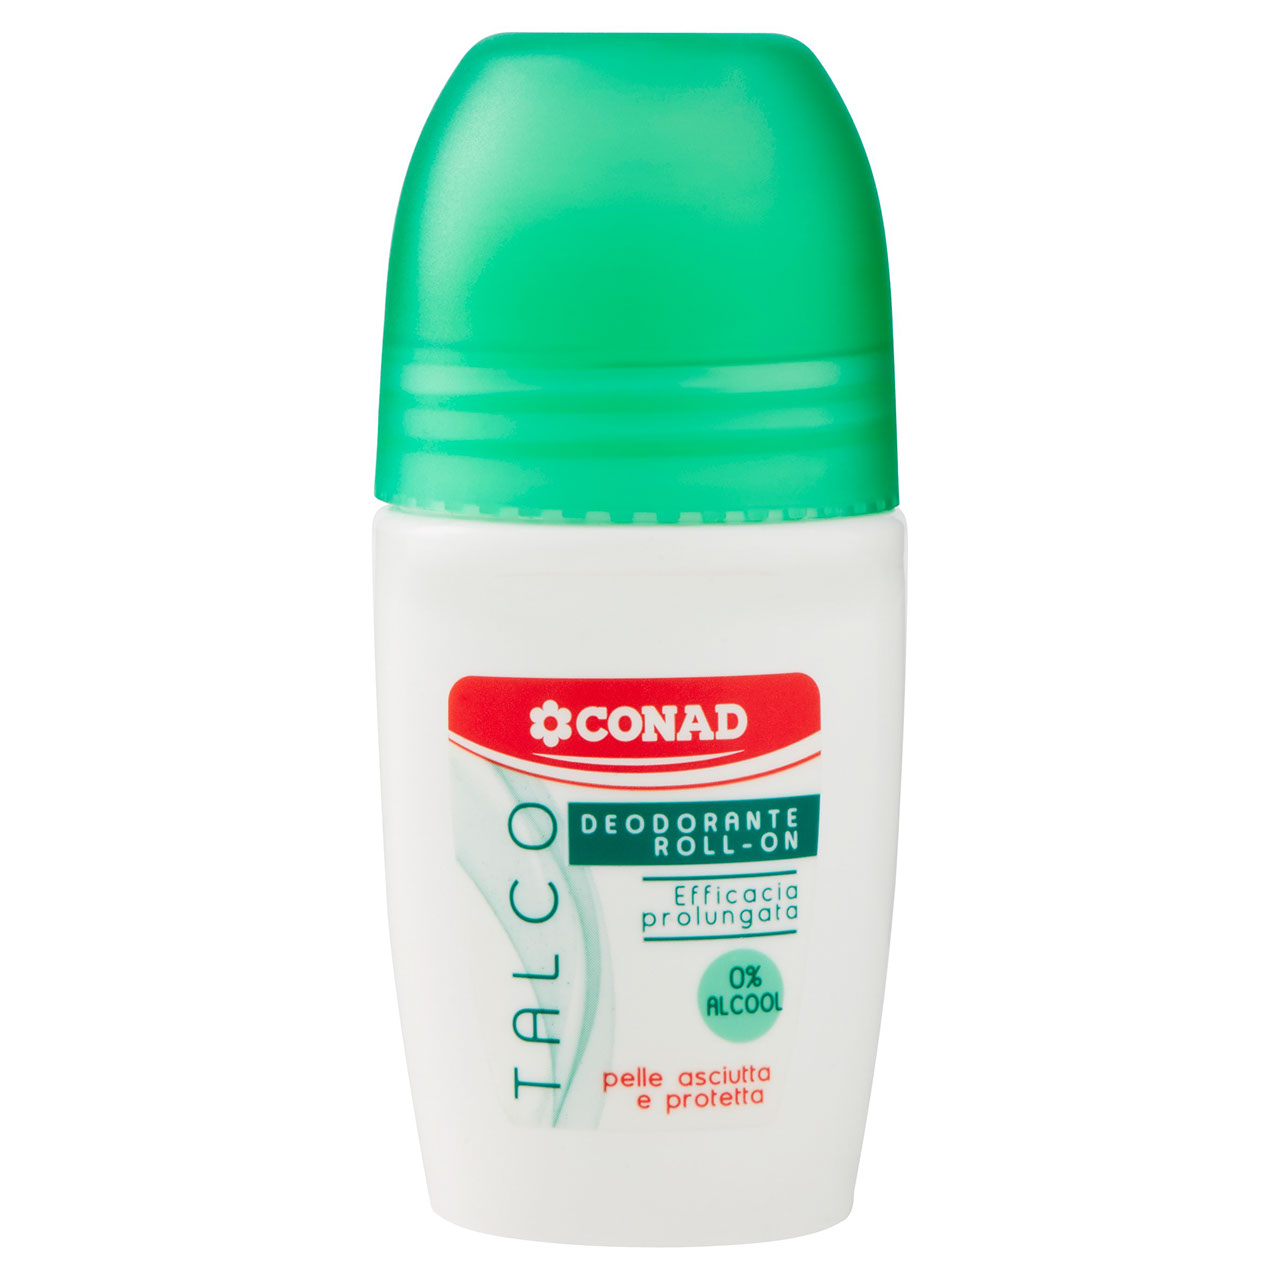 Deodorante Roll-on Talco 50 ml Conad online